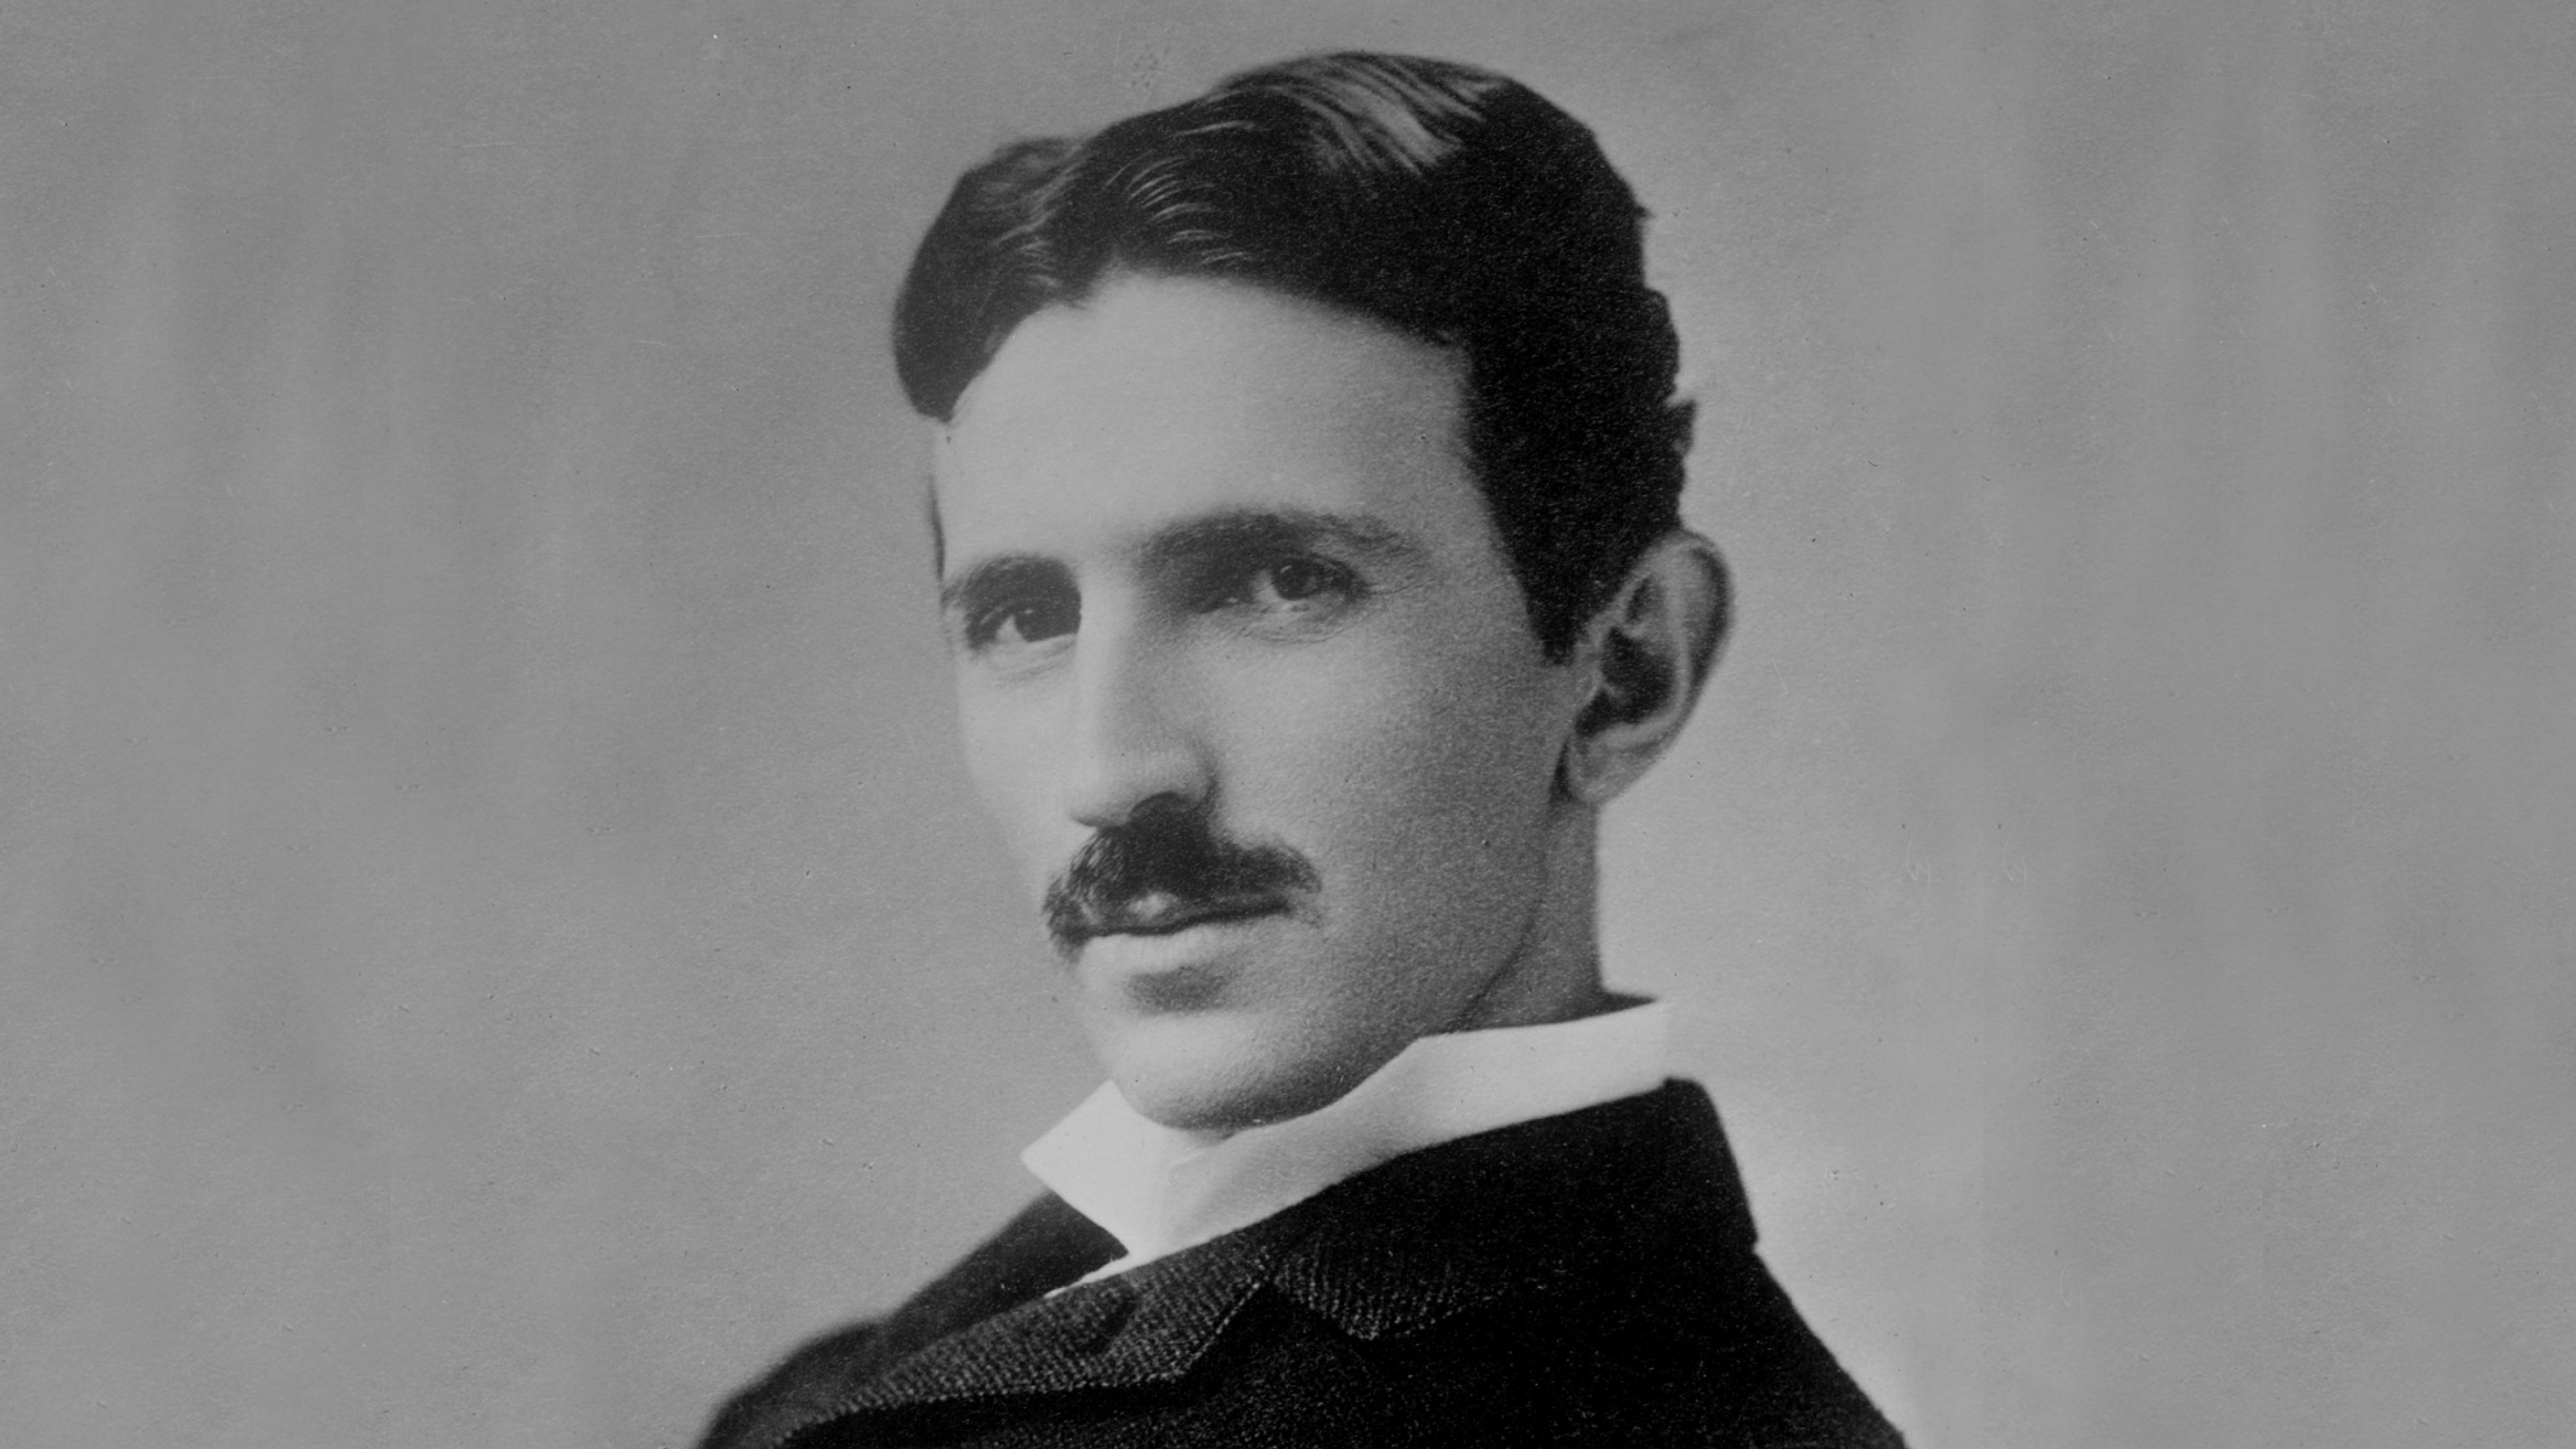 Nikola Tesla Wallpapers Images Photos Pictures Backgrounds